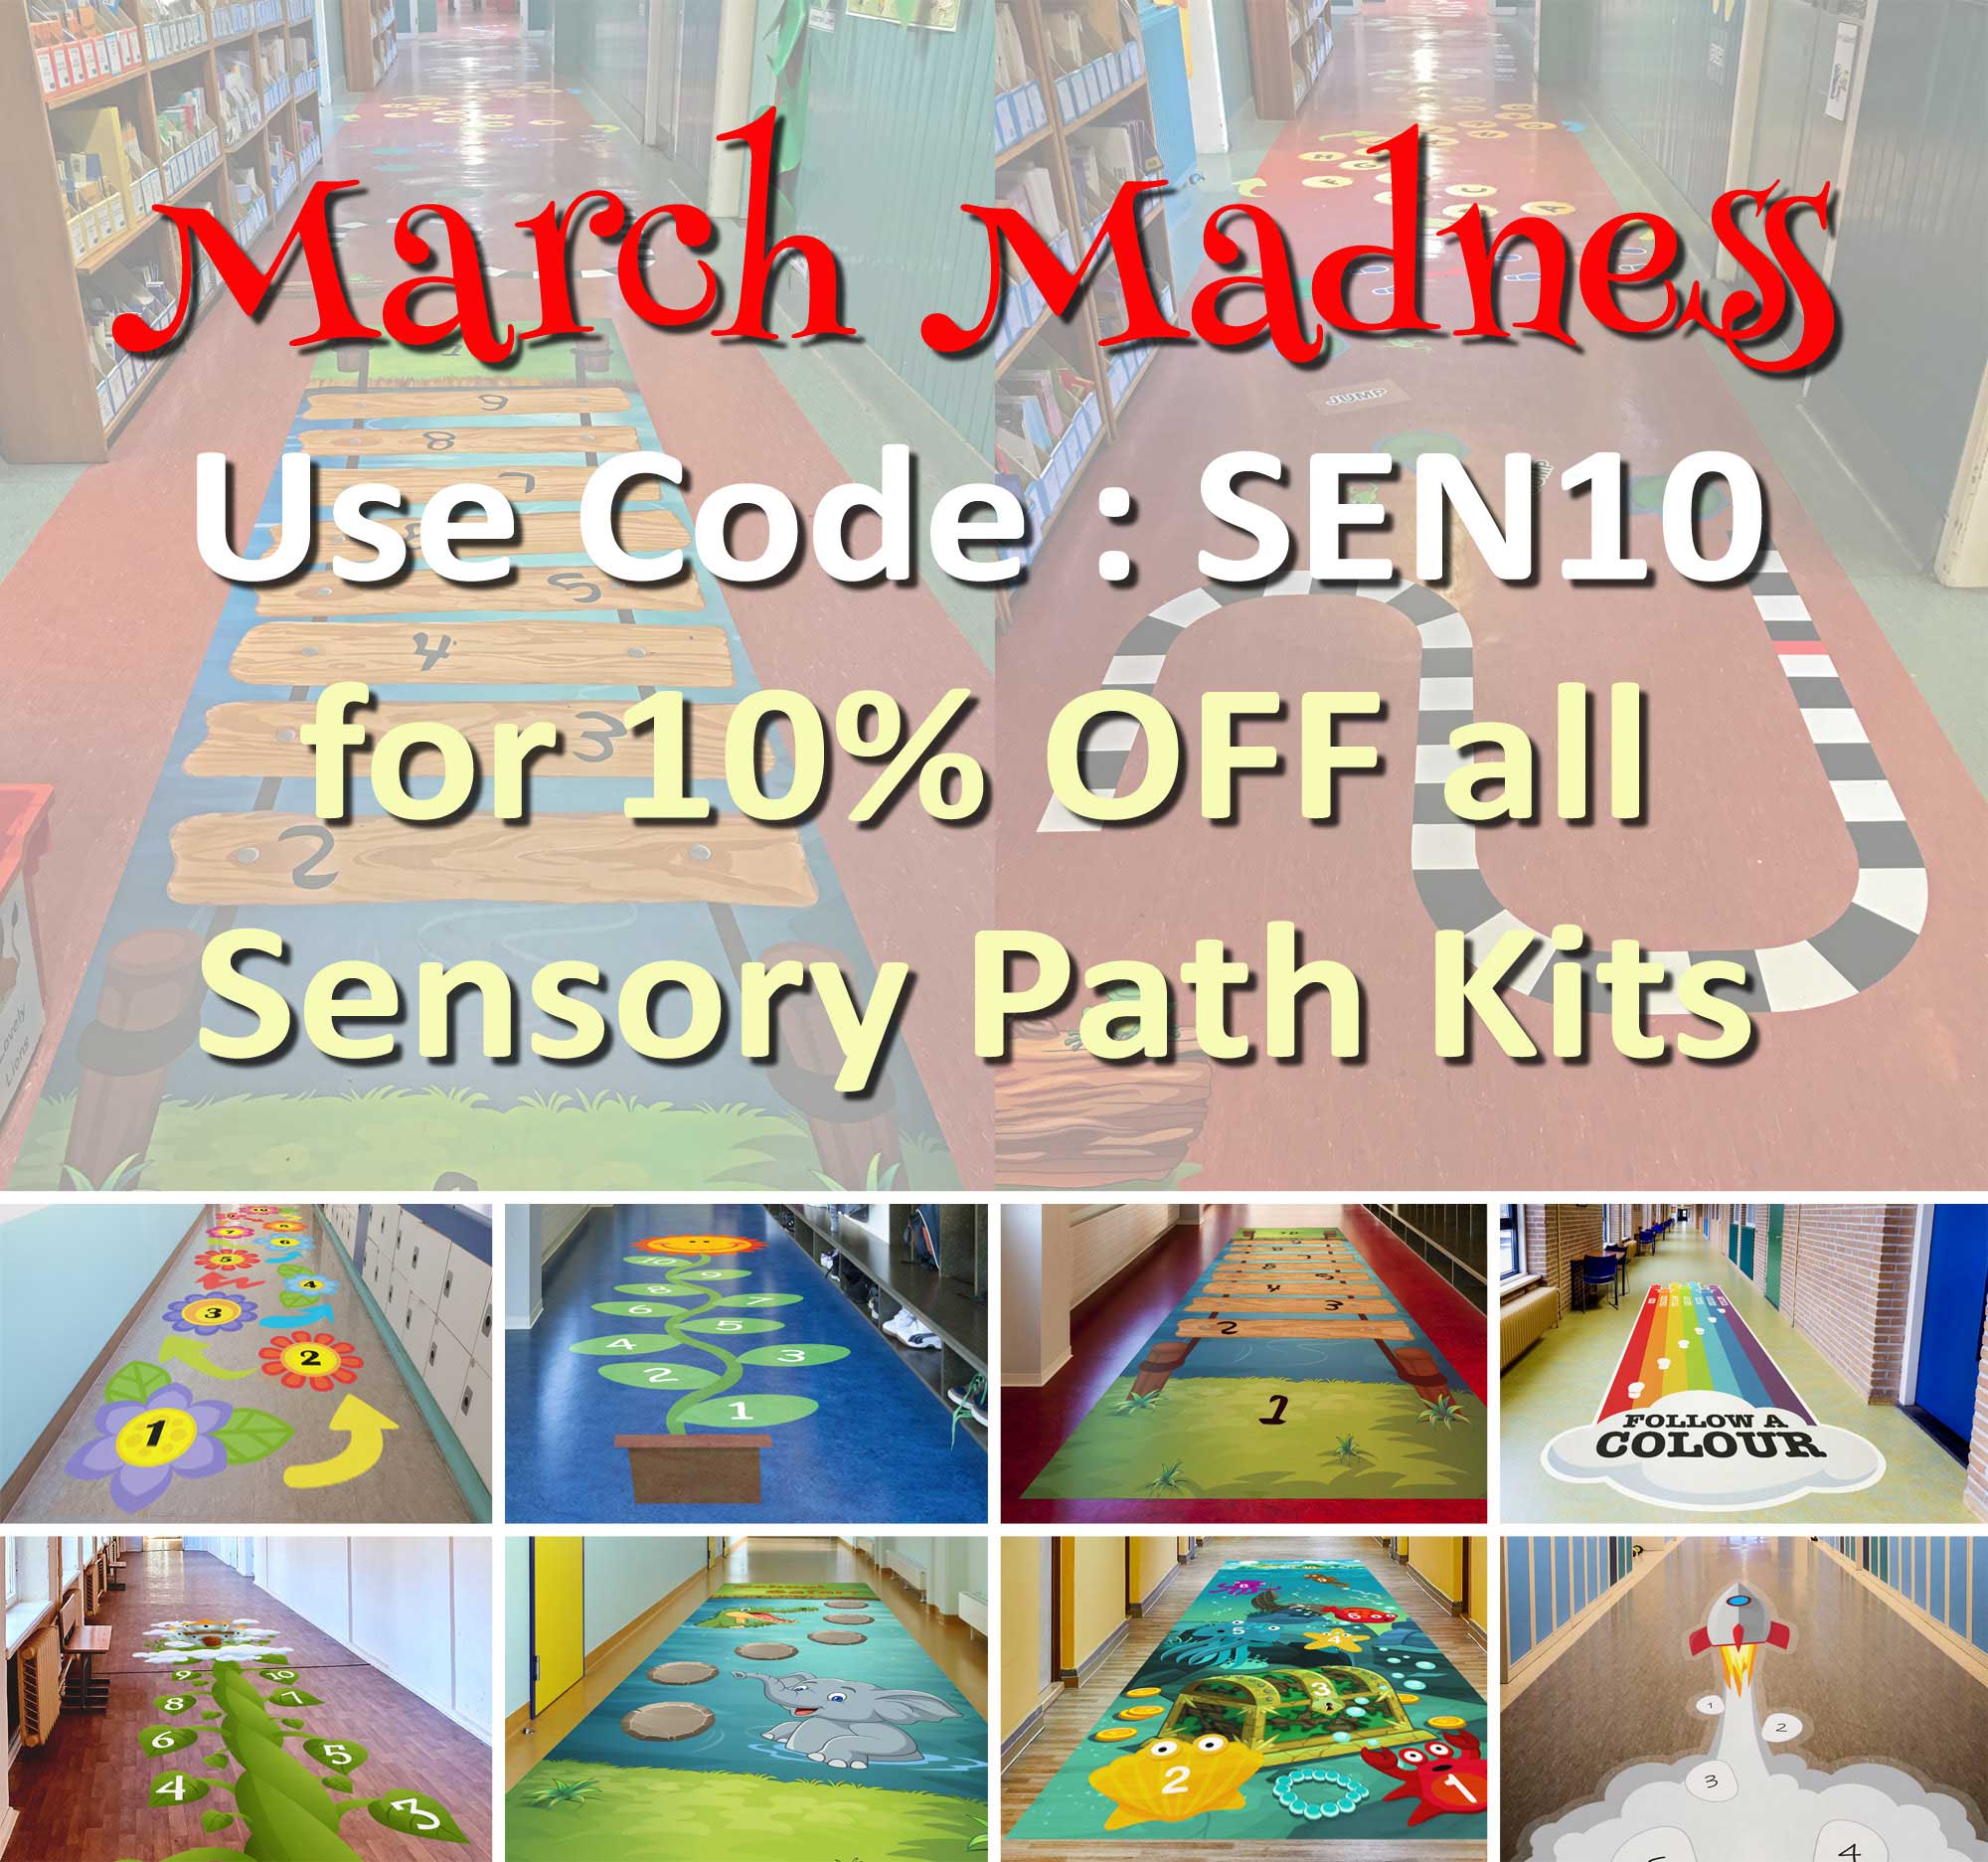 Sensory Pathway Floor Sticker Offers